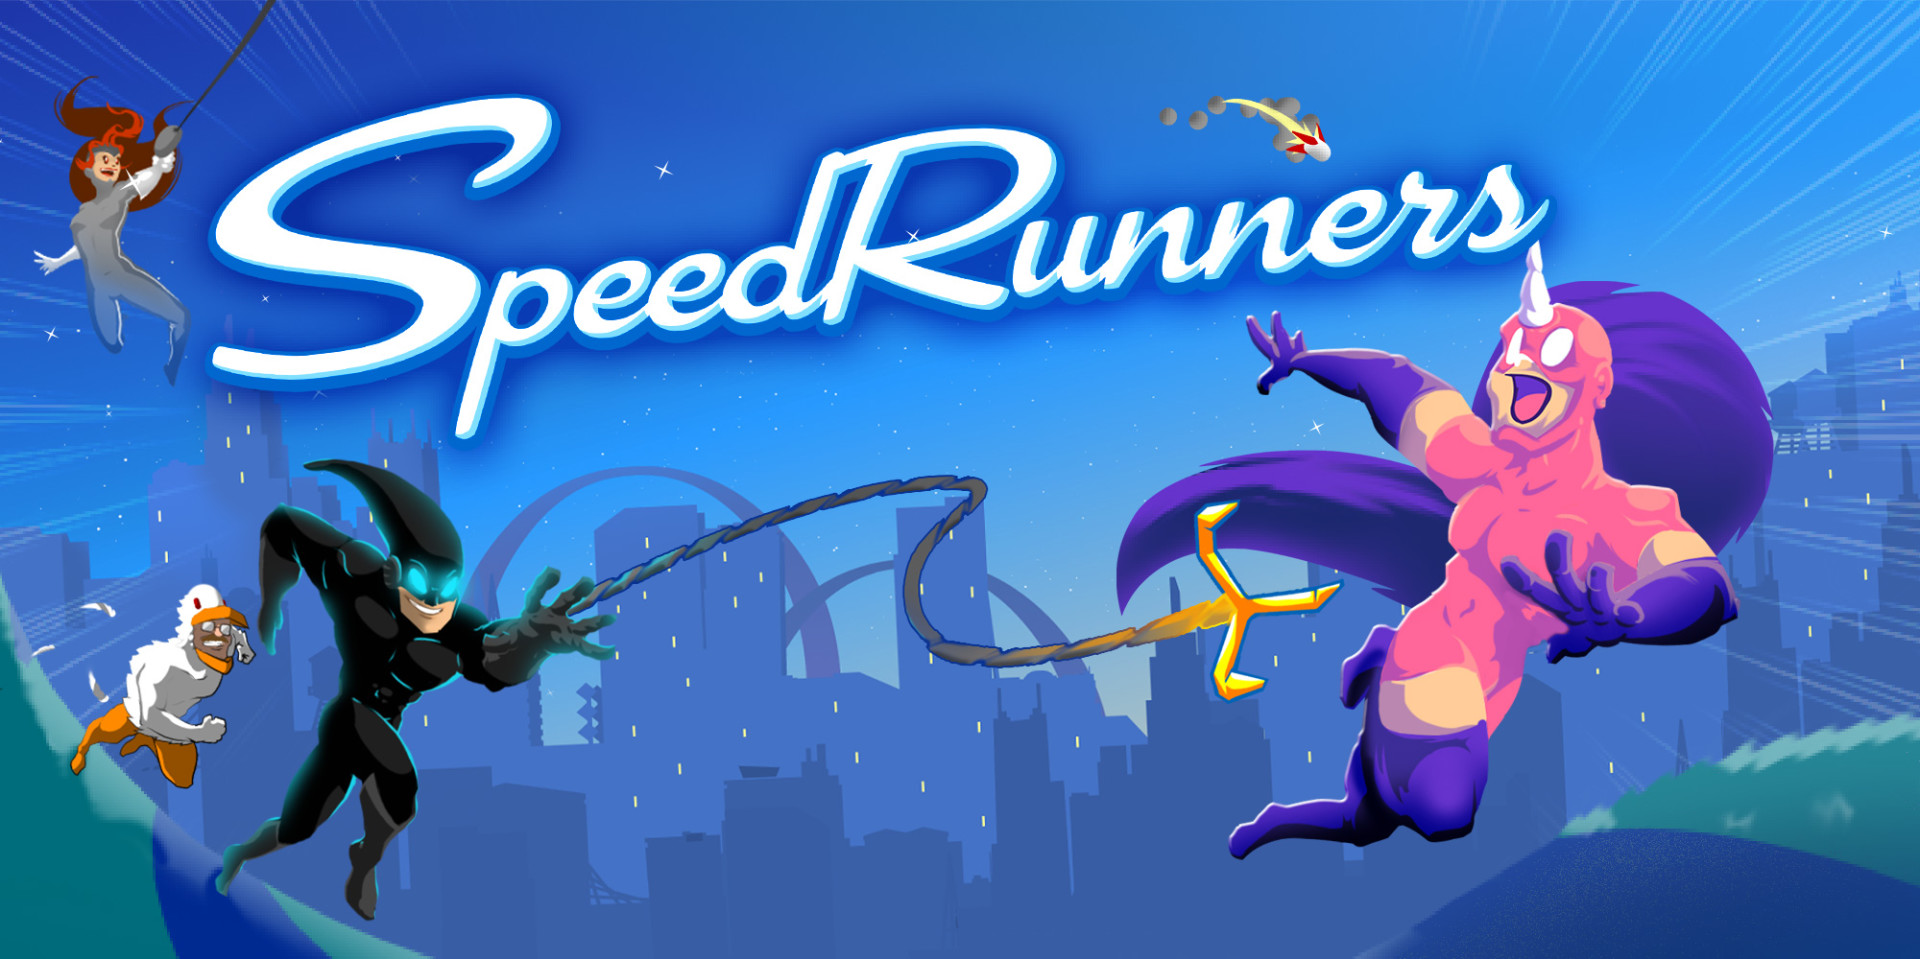 speedrunners game cheat engine